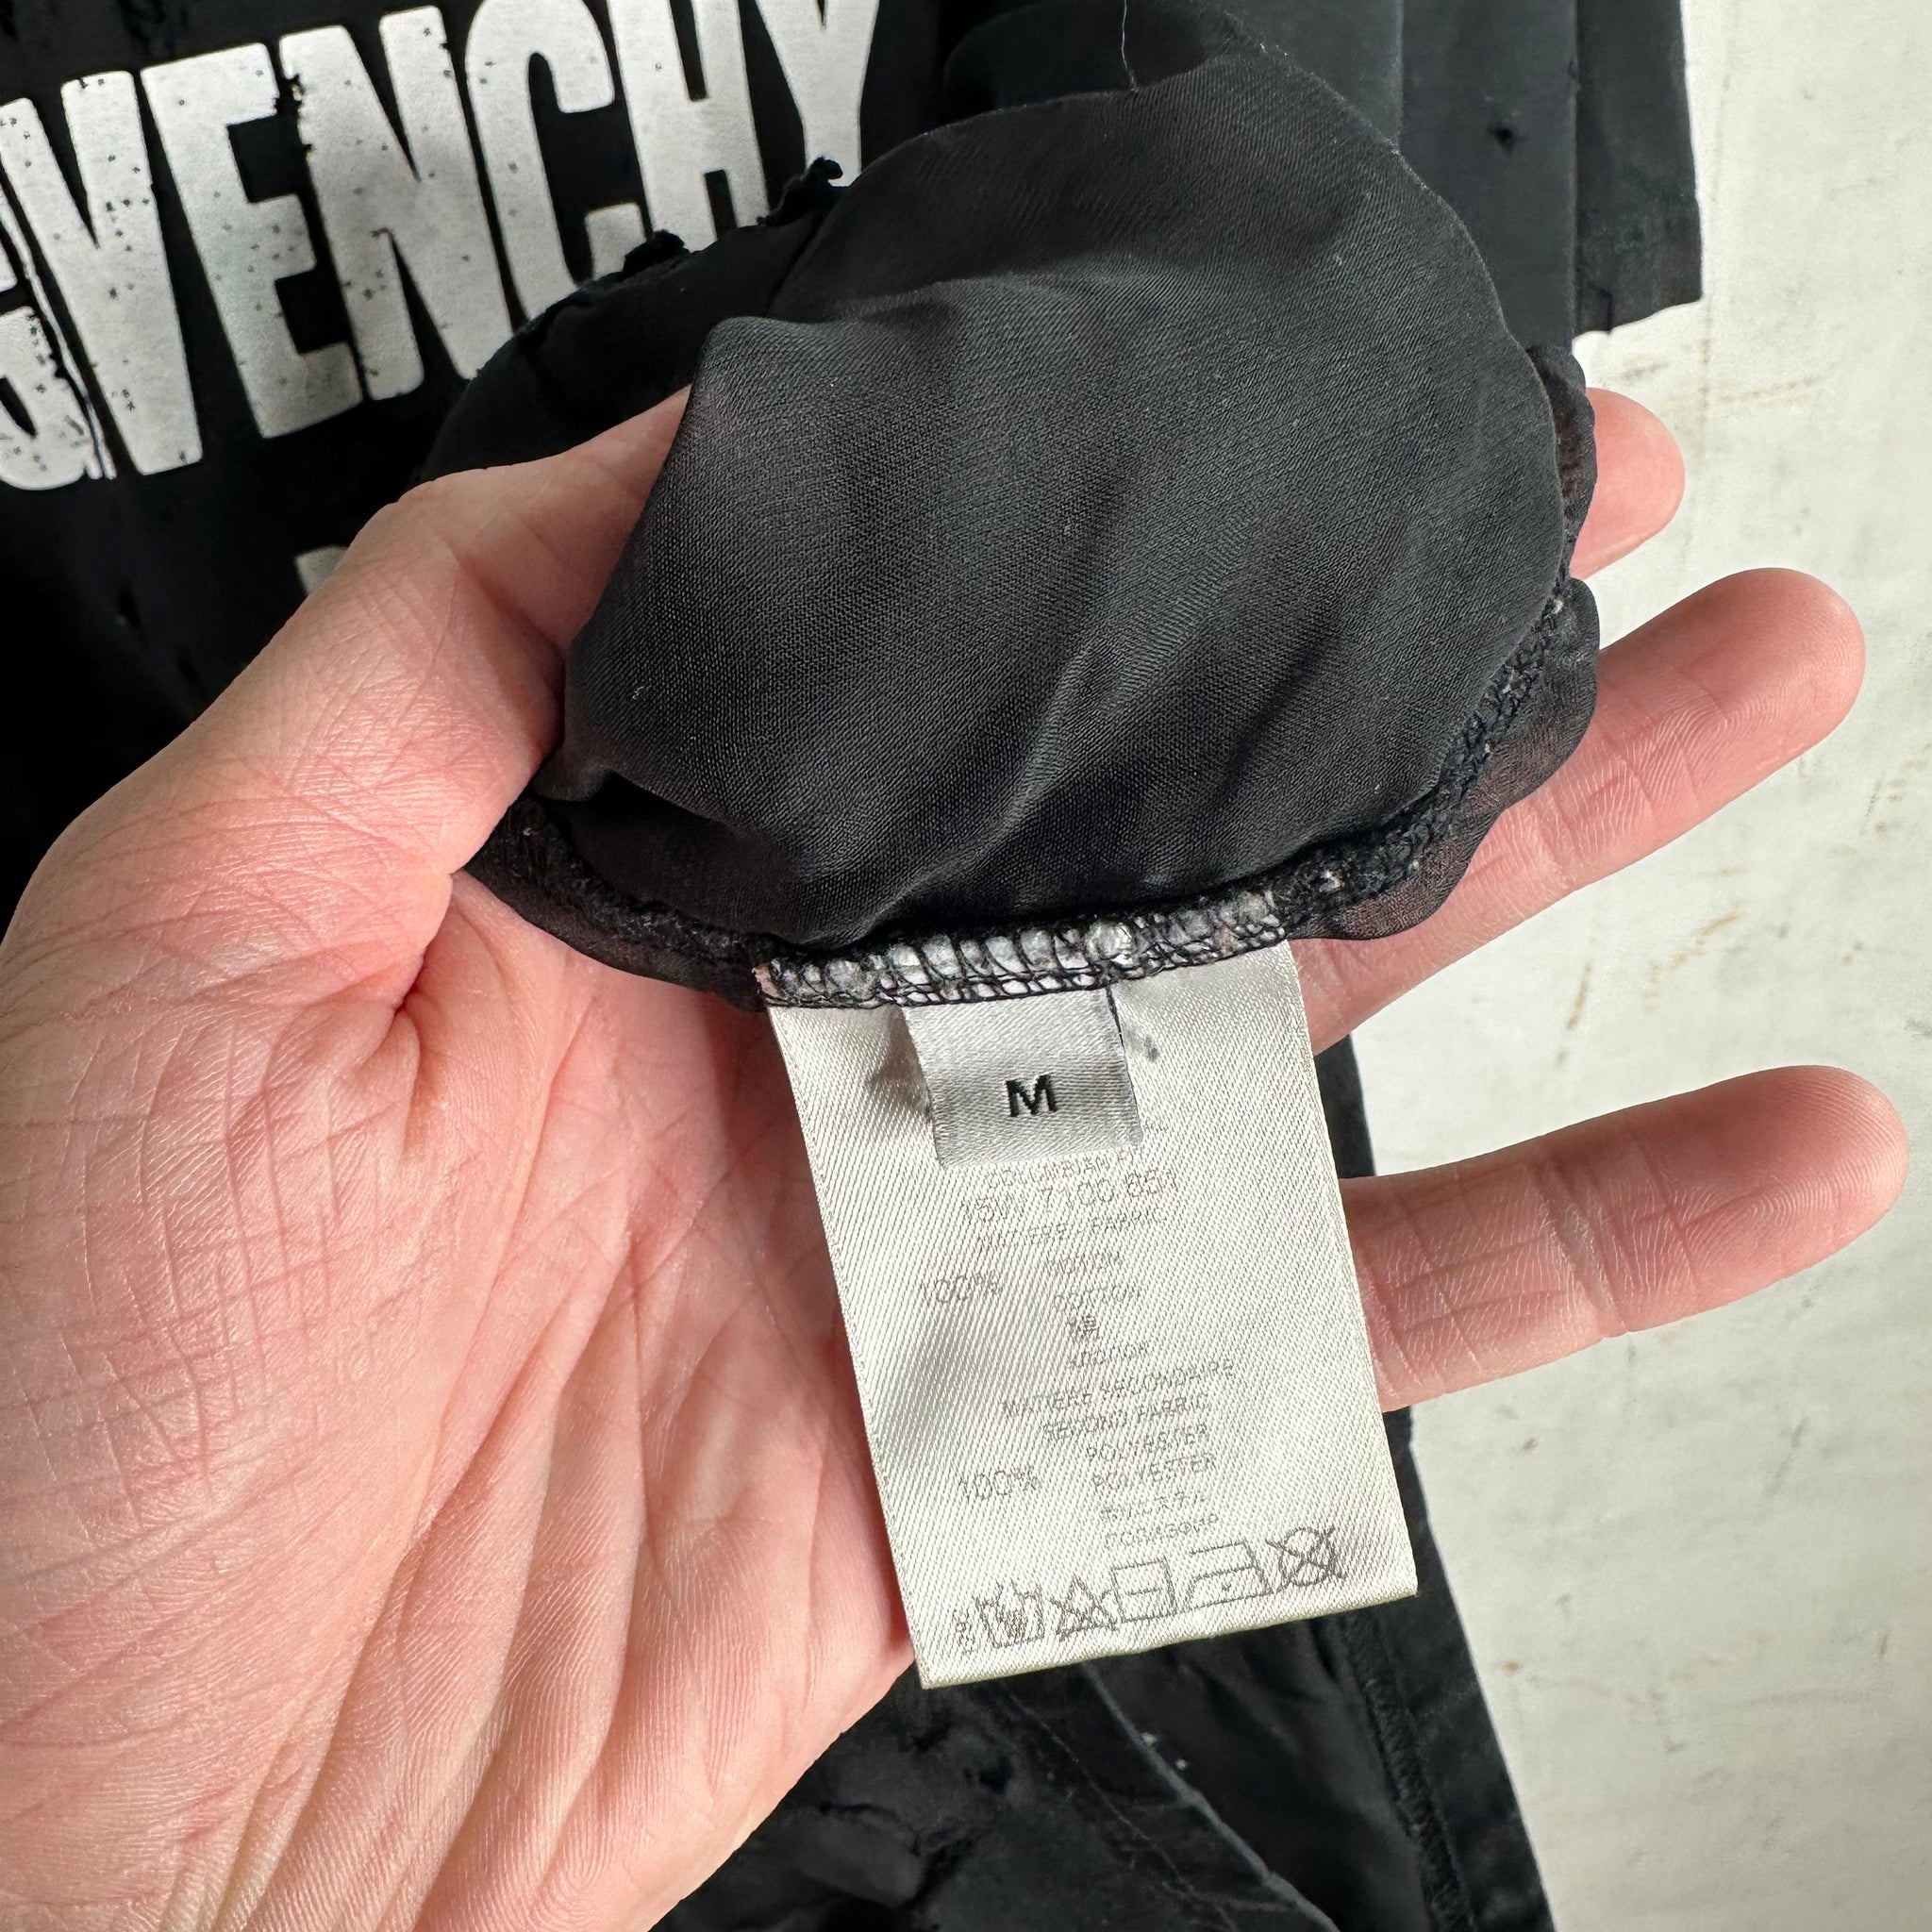 Givenchy Distressed Logo T-Shirt